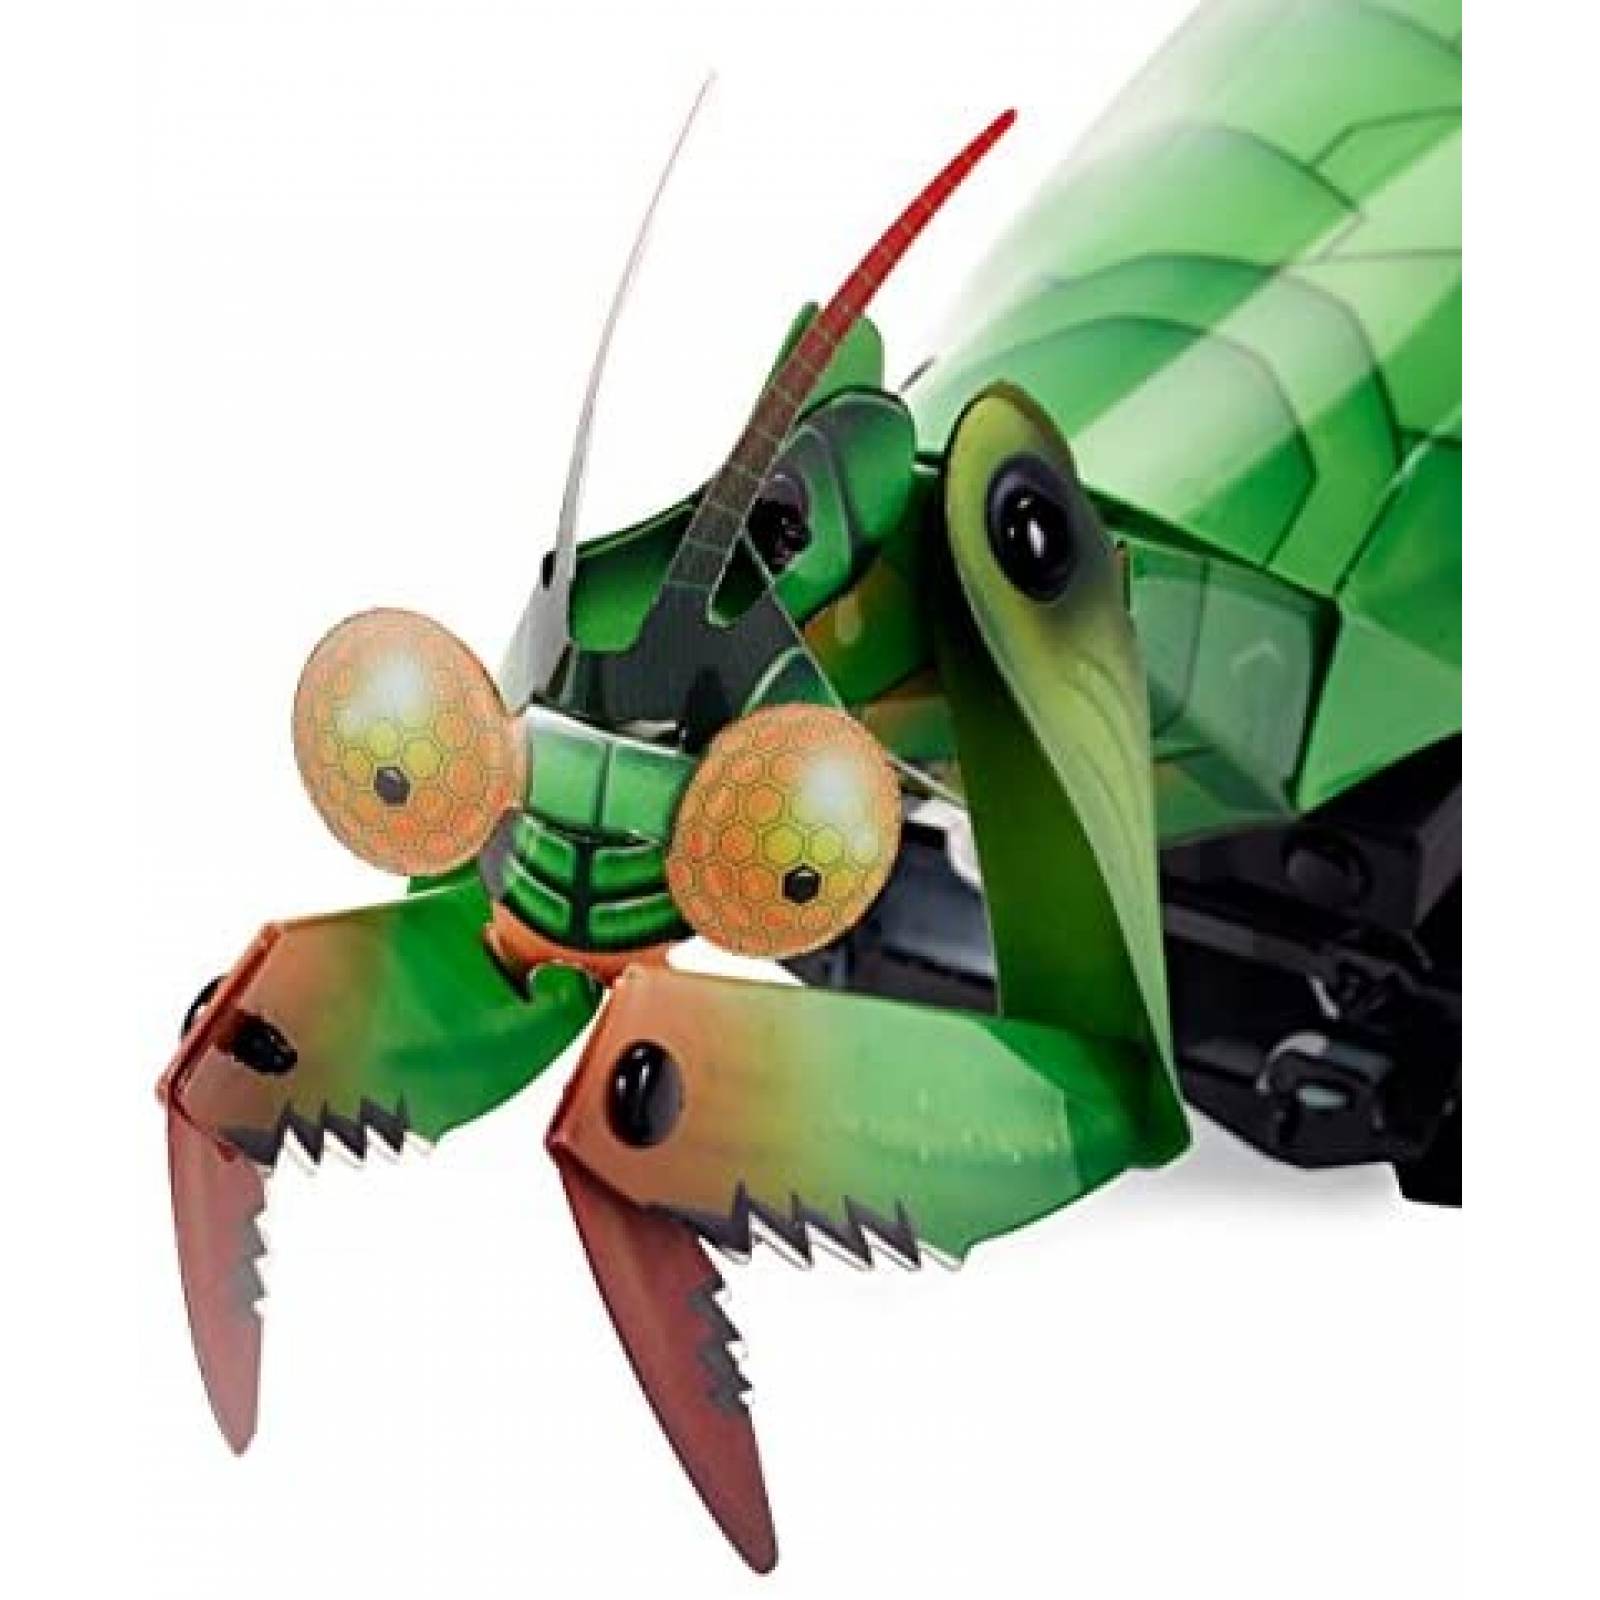 Robot Kamigami Mantix Plástico Plegable Luces Sonidos -Verde